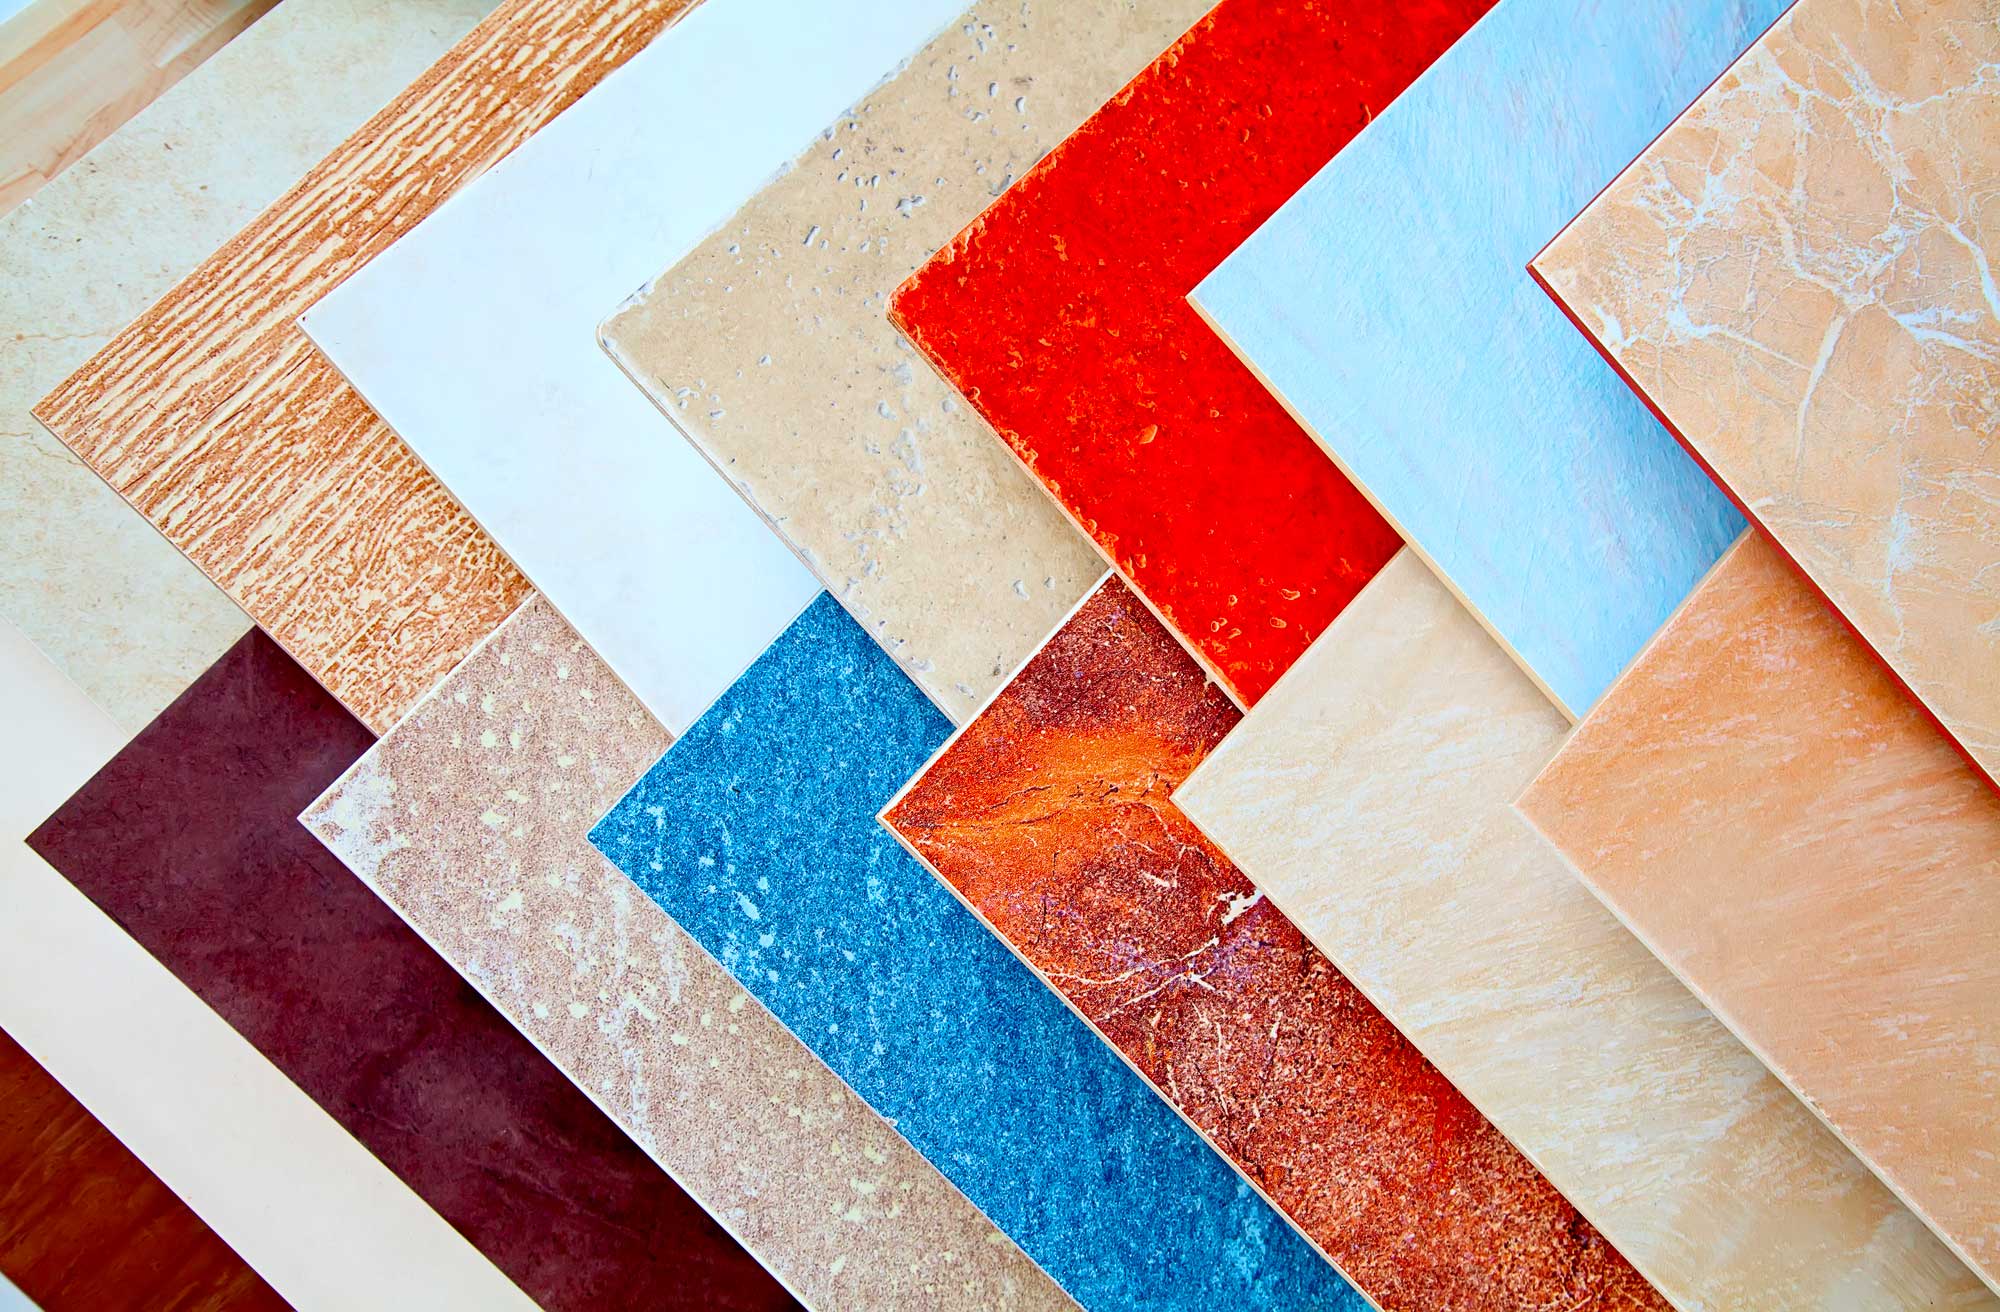 TILE TRENDS | Most popular tile colours in 2022